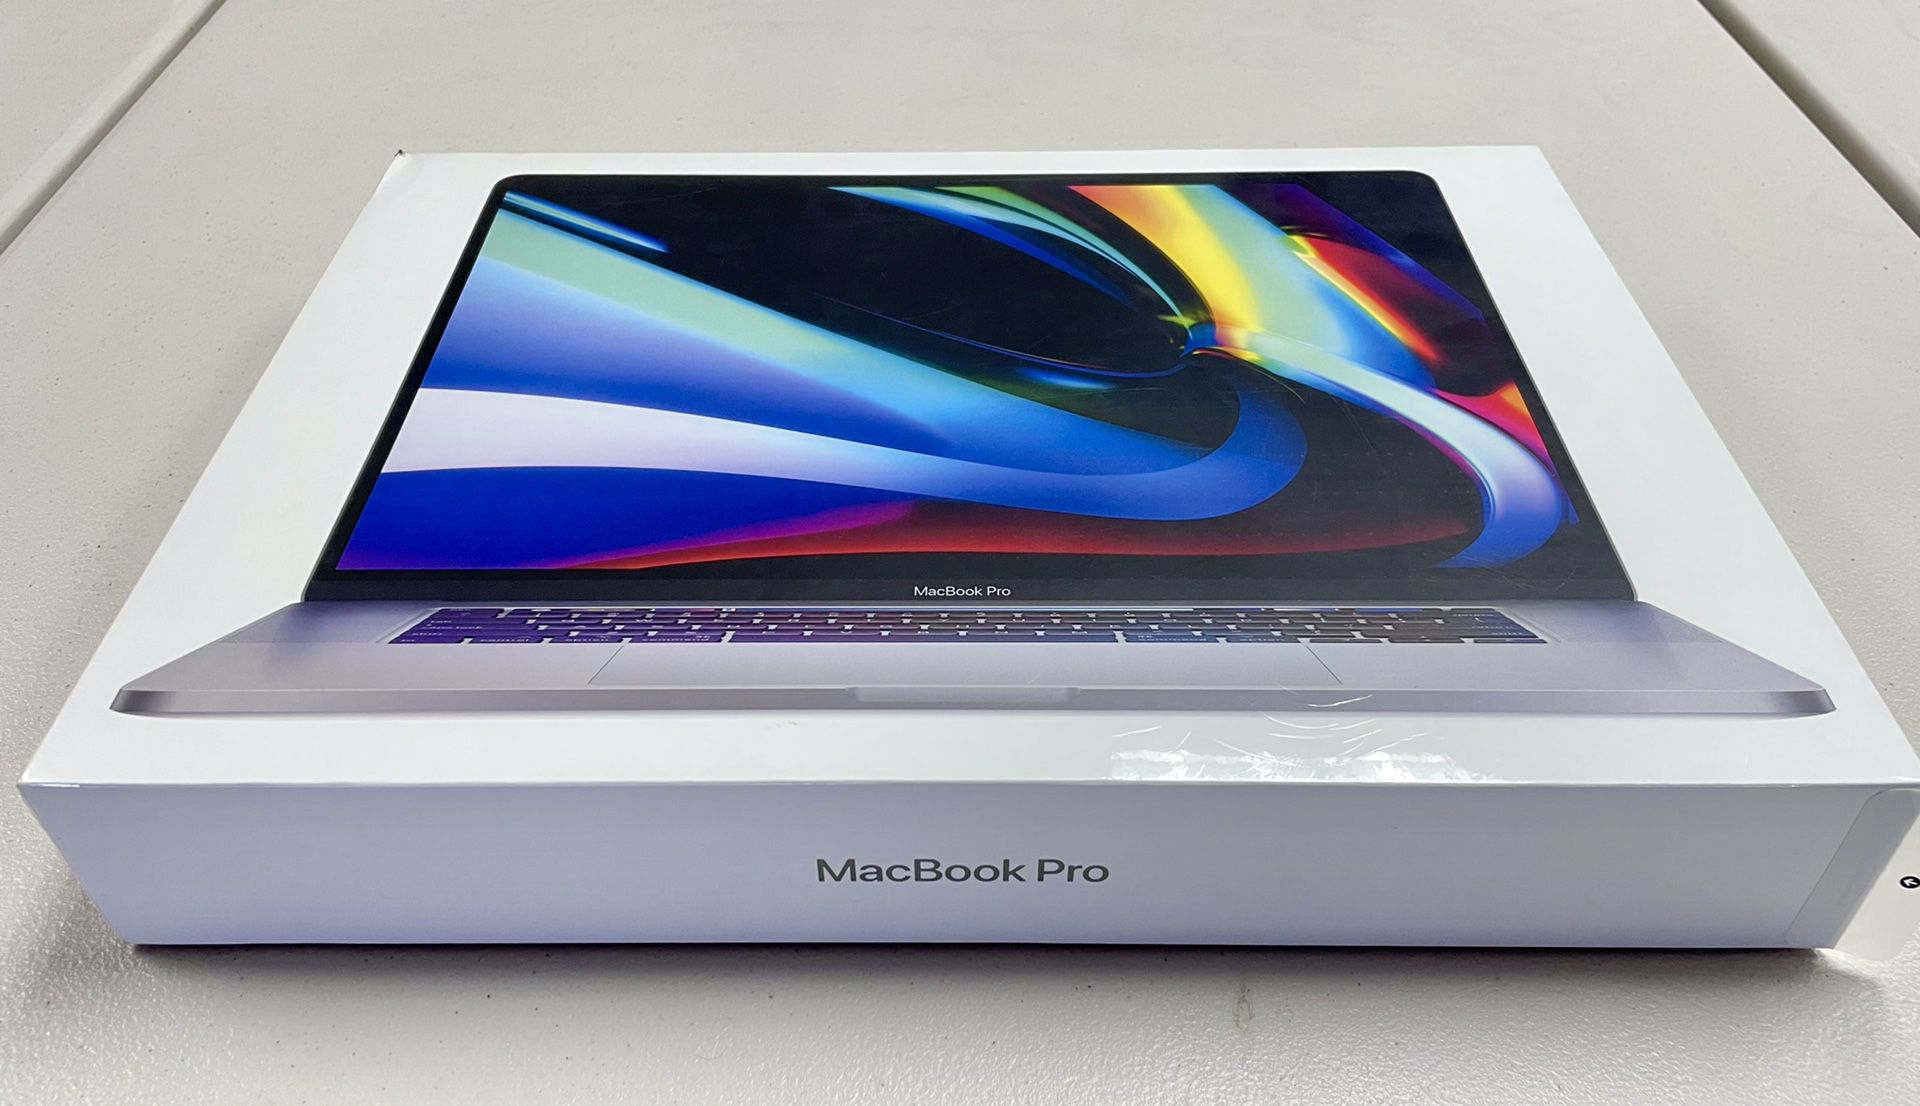 BRAND NEW, SEALED MacBook Pro 16” - Space Gray / 6-core i7 / SSD 512 GB / RAM 16 GB / AMD 5300M 4 GB / No Tax!